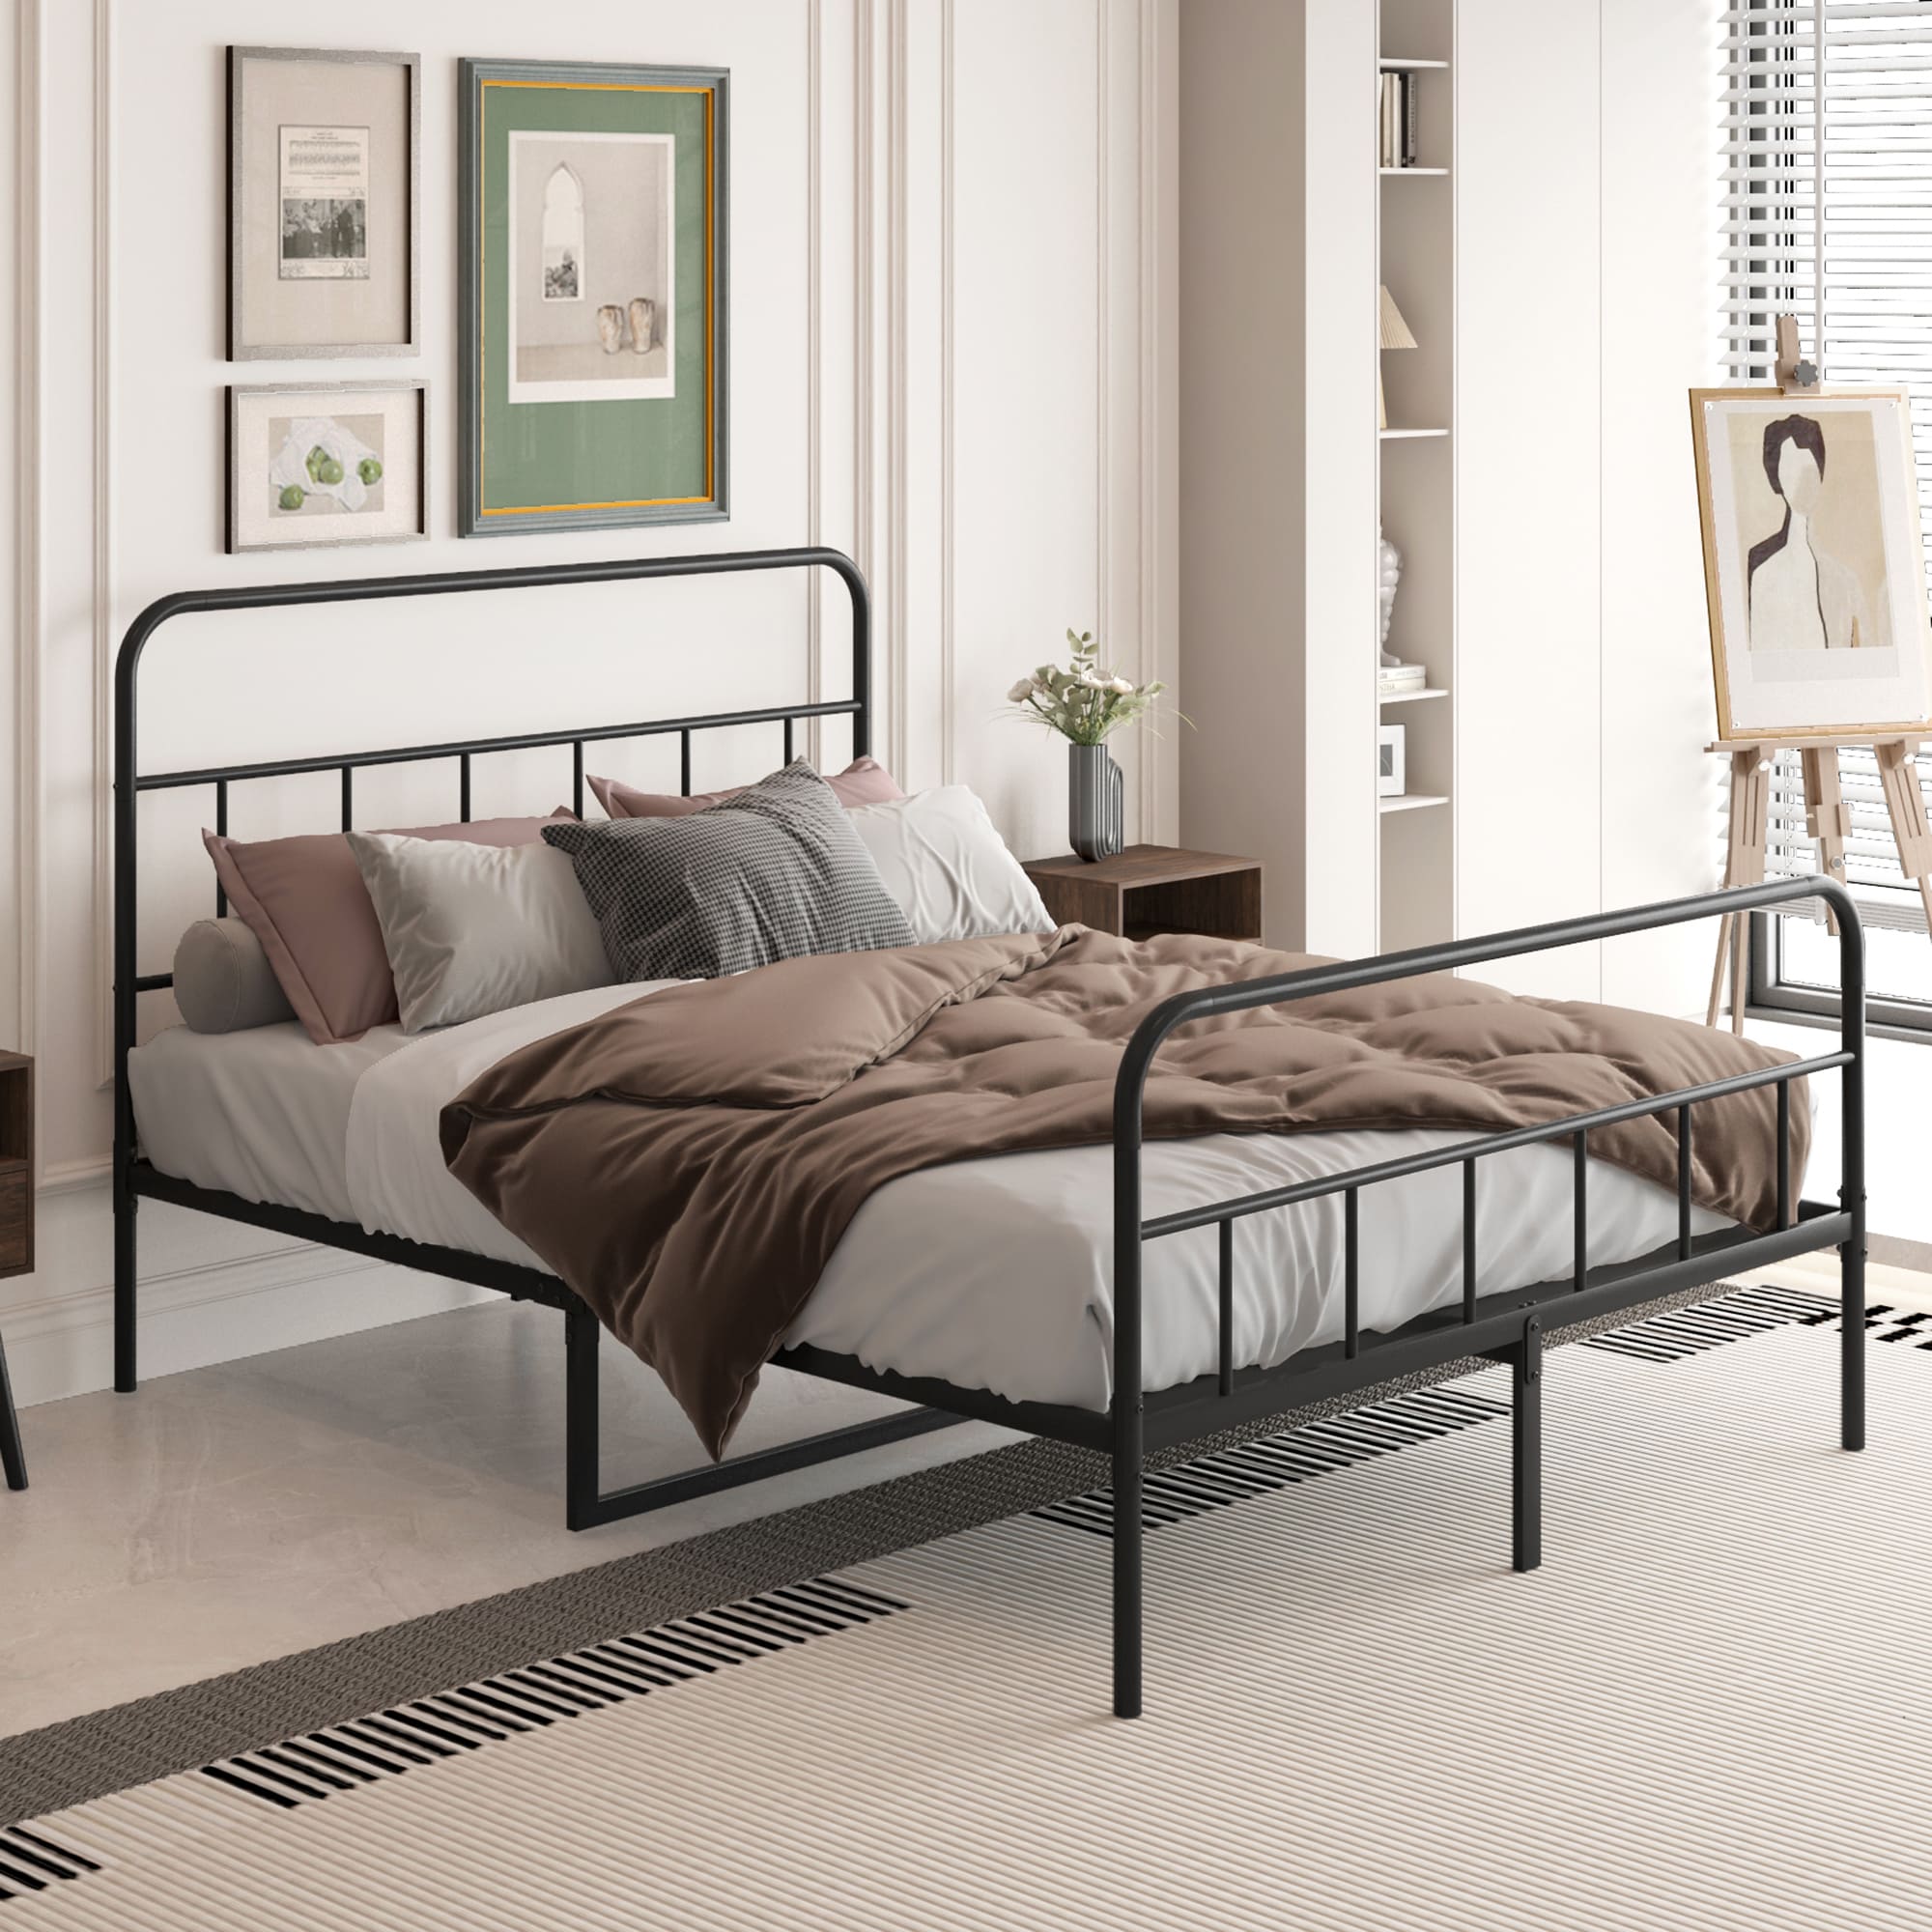 Full Metal Platform Bed frame with Headboard Beds at Lowes.com